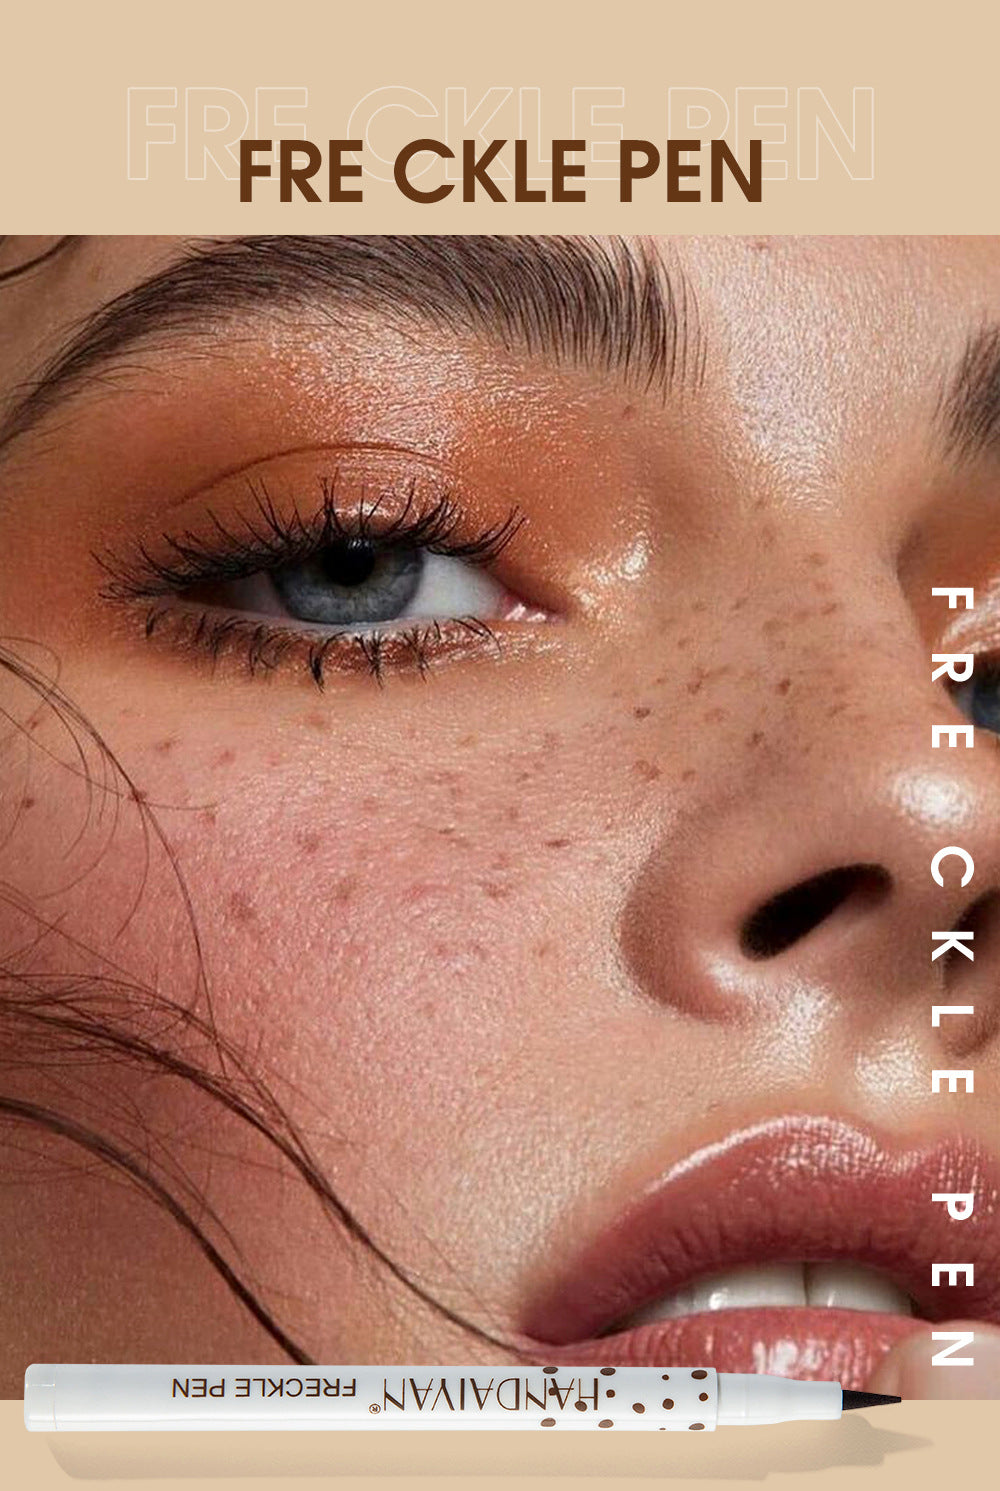 HANDAIYAN Makeup Freckles Natural Simulation Is Not Easy To Fade Makeup Spotting Pen